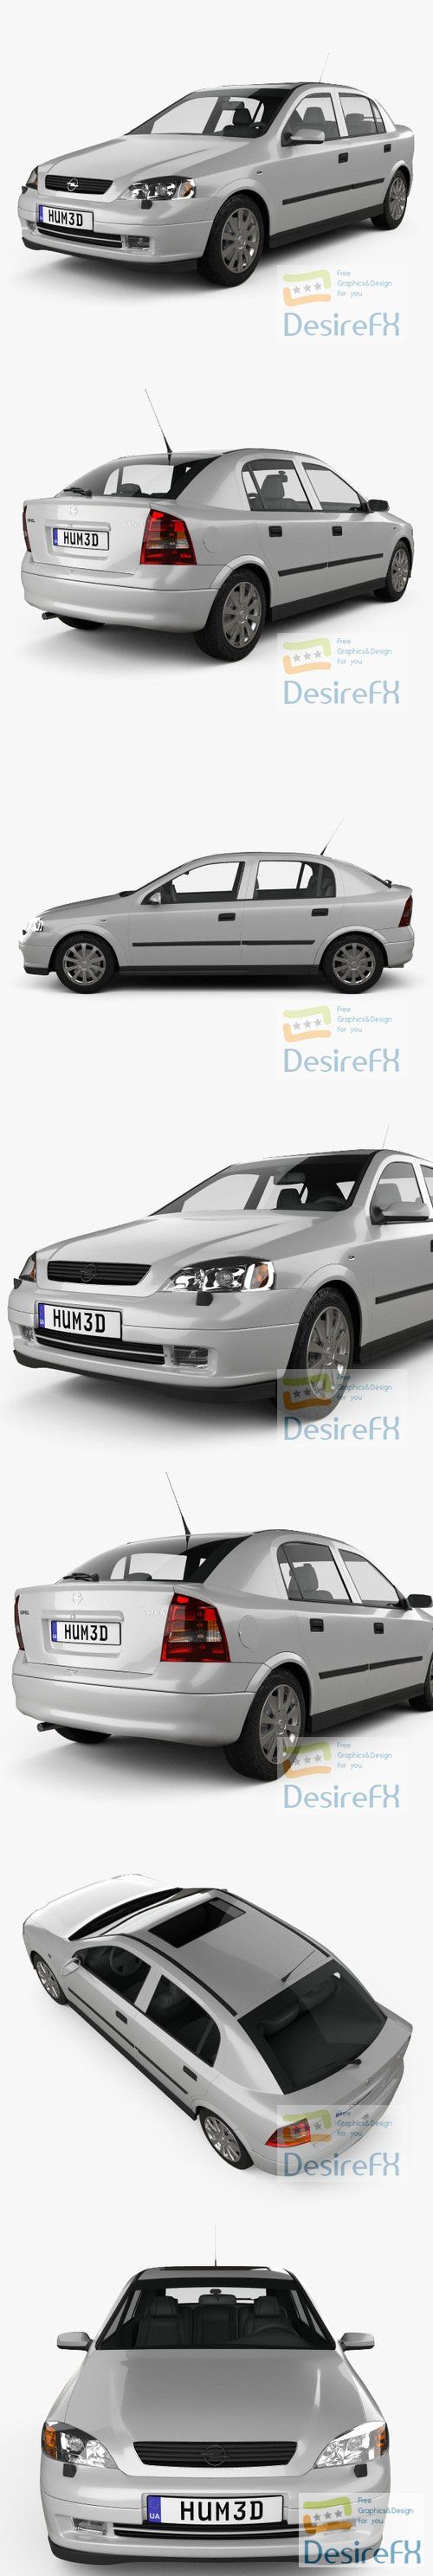 Opel Astra G liftback 1998 3D Model